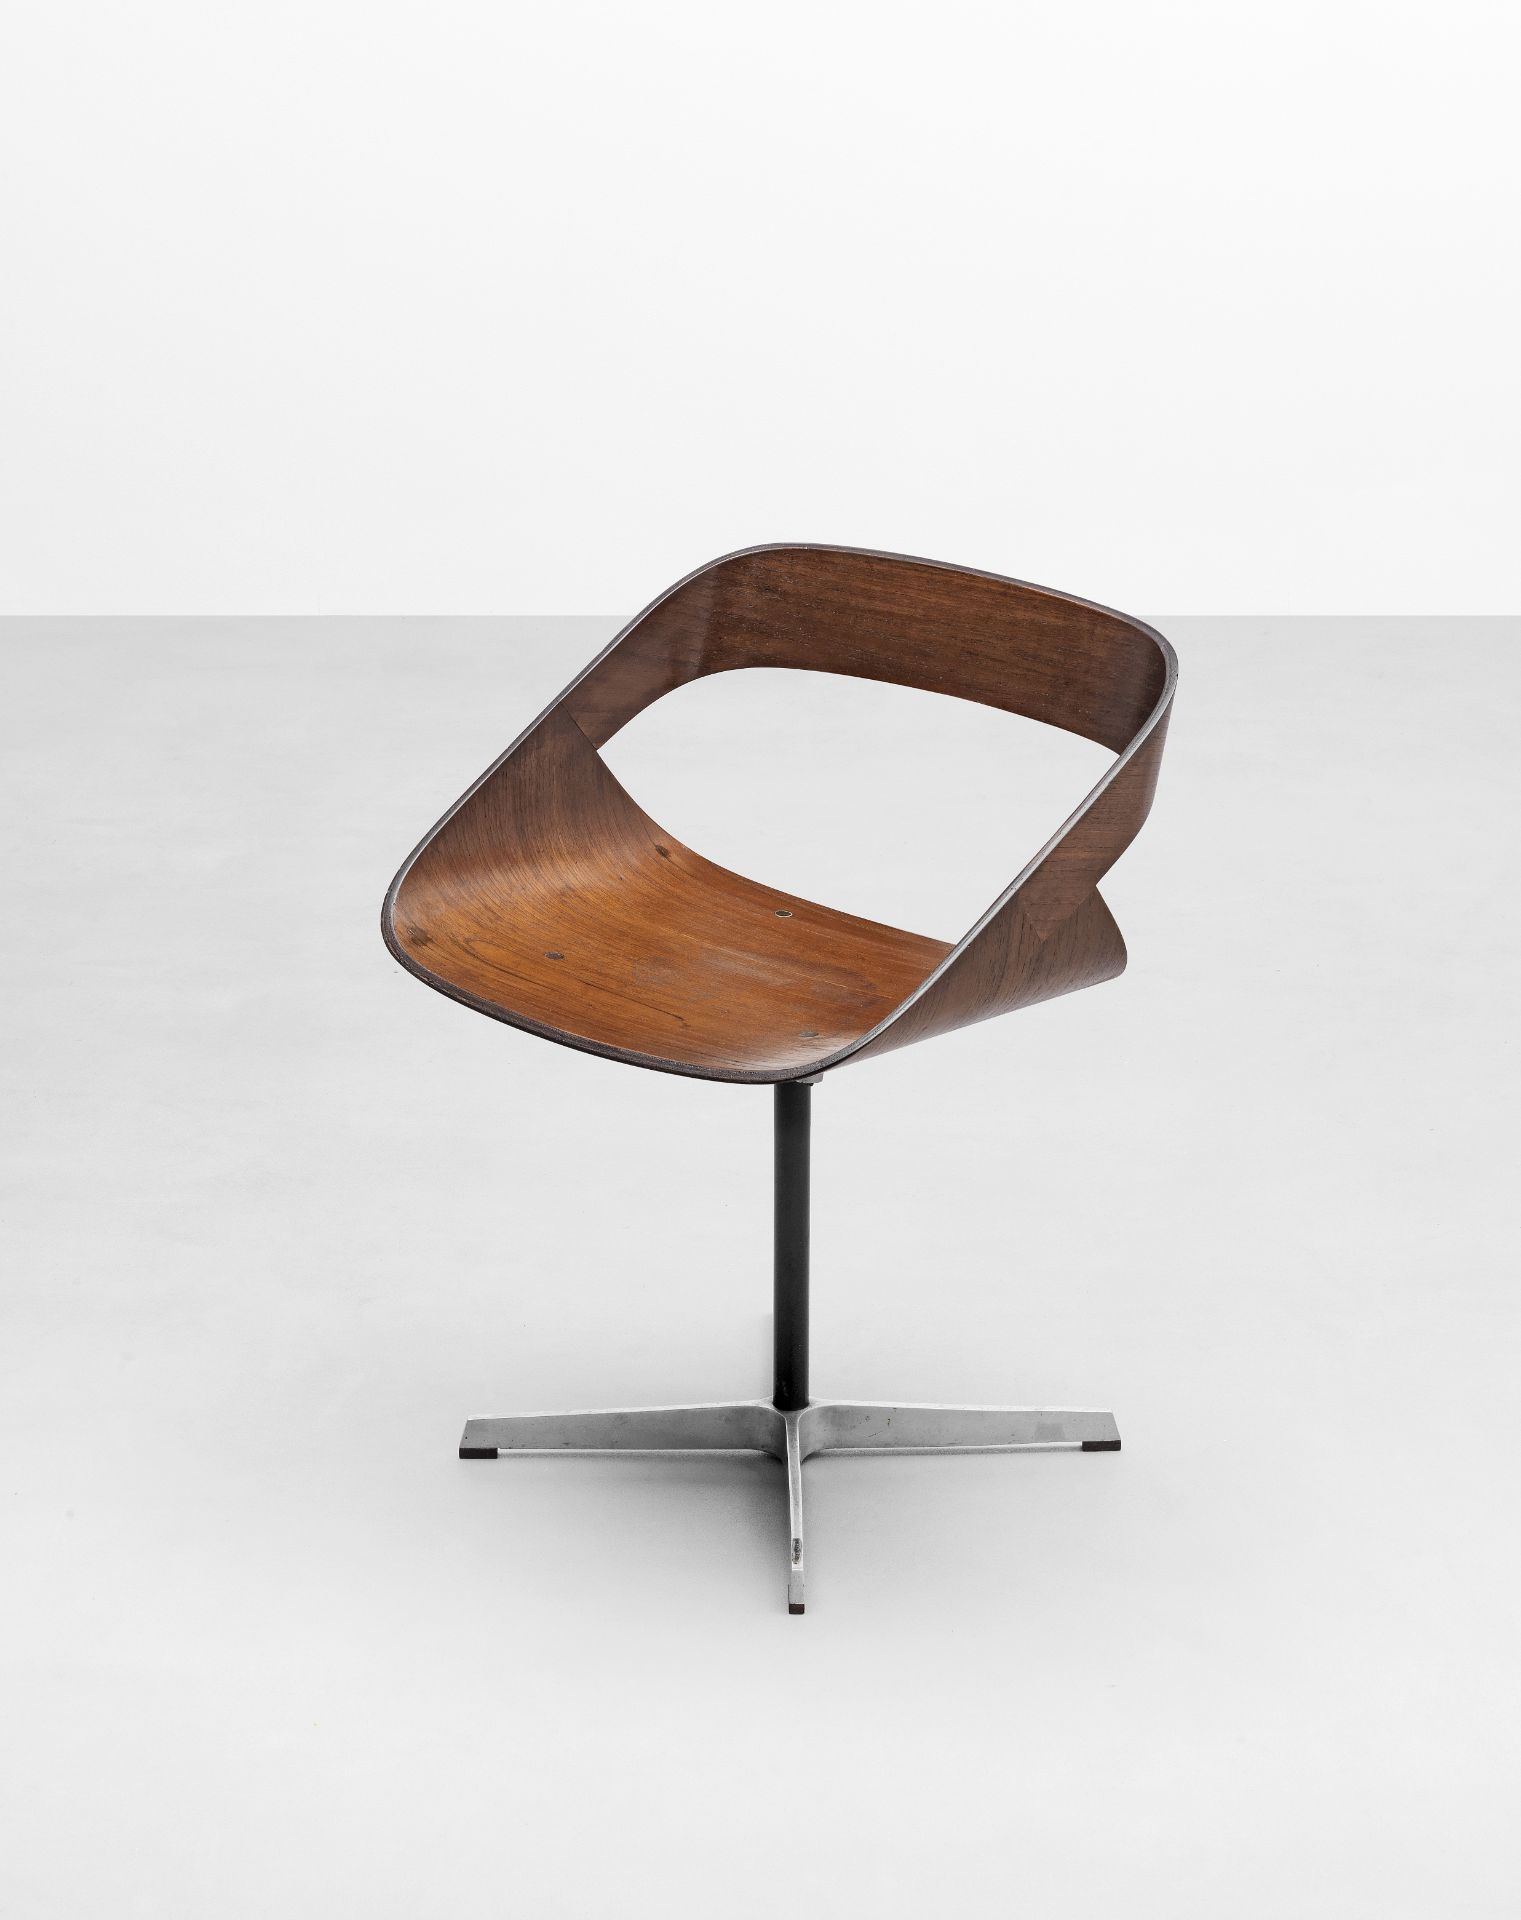 Geoffrey Harcourt Swivel chair, model no. 130, circa 1962